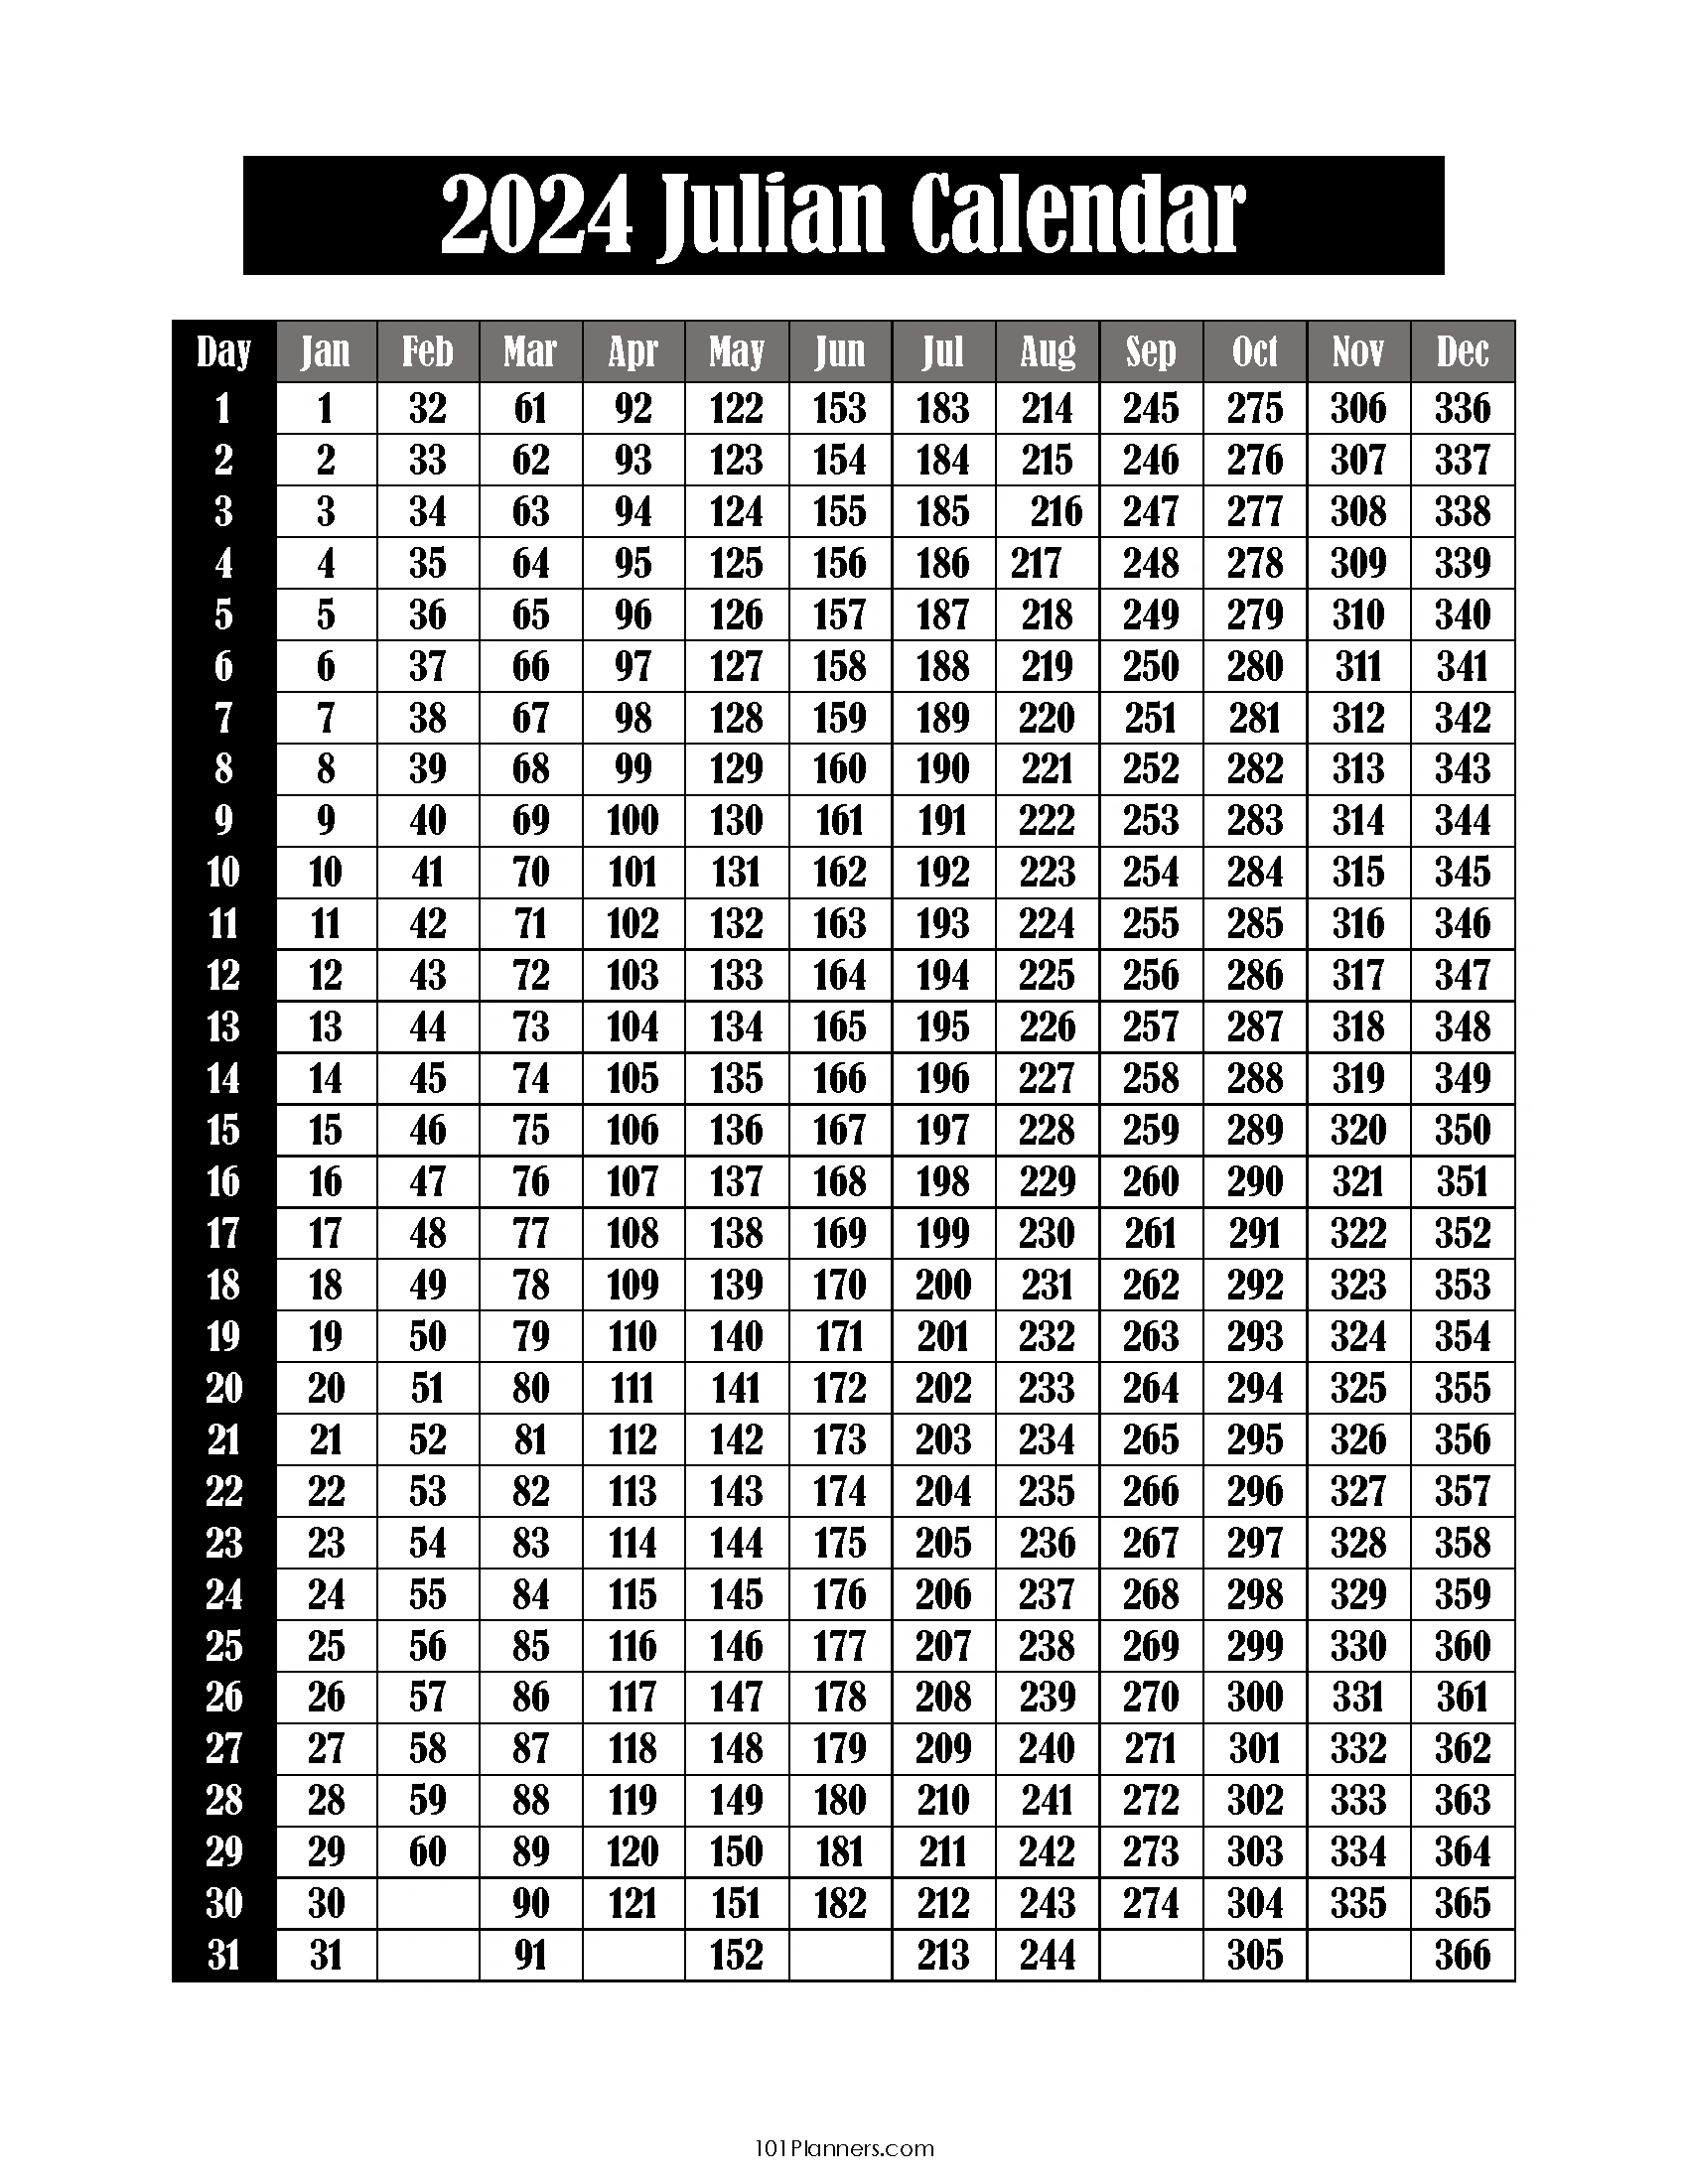 Free Printable Julian Calendar 2024-2032 | Julian Date Today throughout Julian Date 2024 Calendar Printable